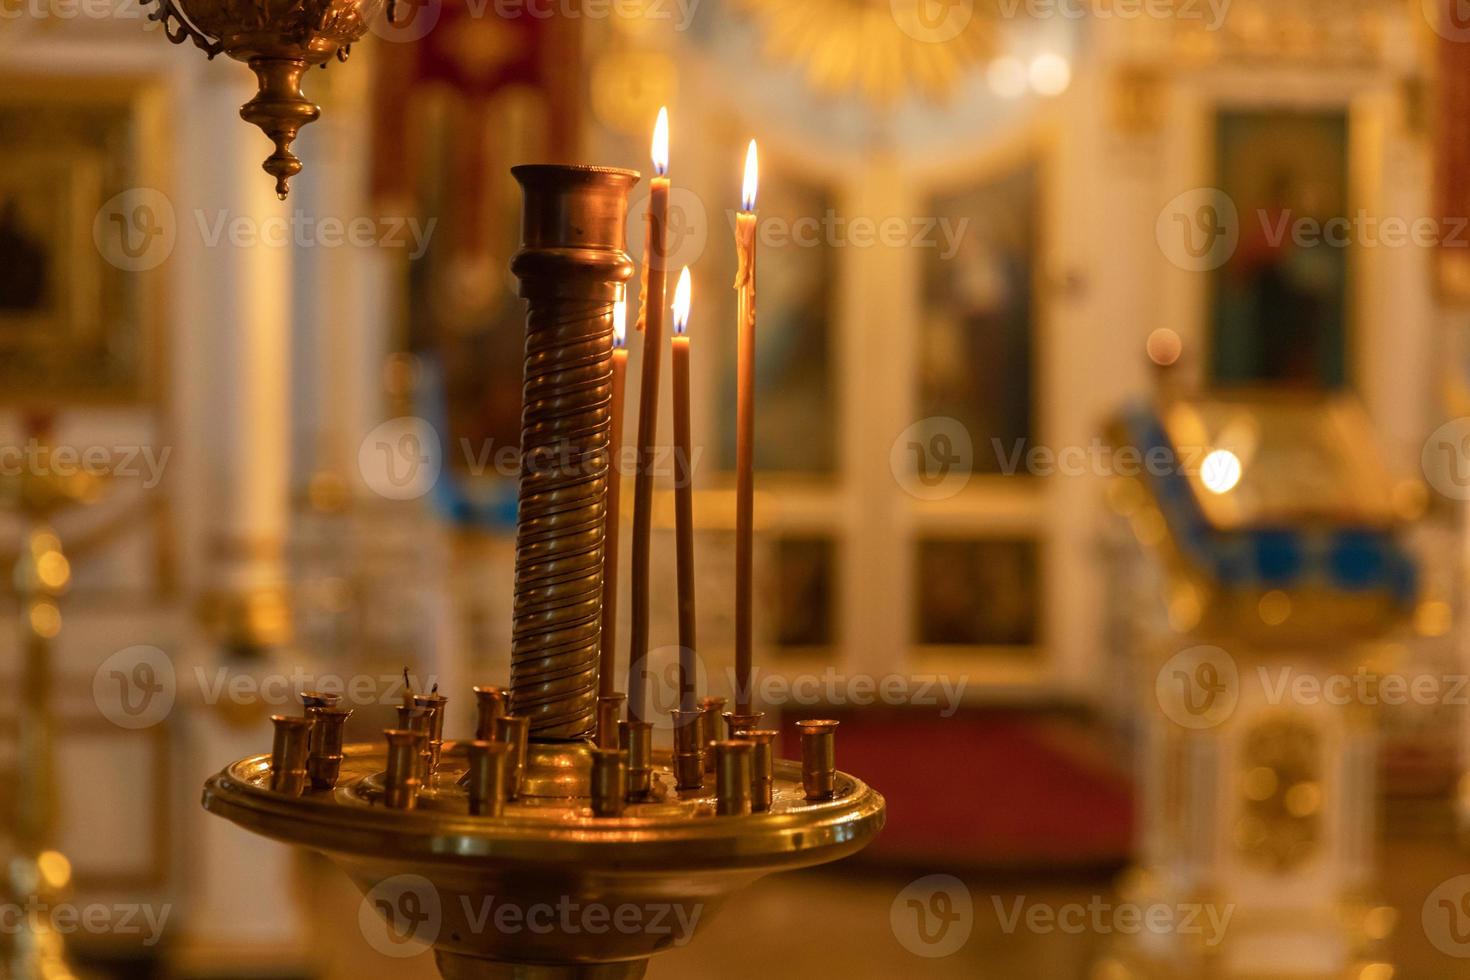 Iglesia Ortodoxa. cristiandad. decoración interior festiva con velas encendidas e icono en la iglesia ortodoxa tradicional en vísperas de pascua o navidad. religión fe orar símbolo. foto